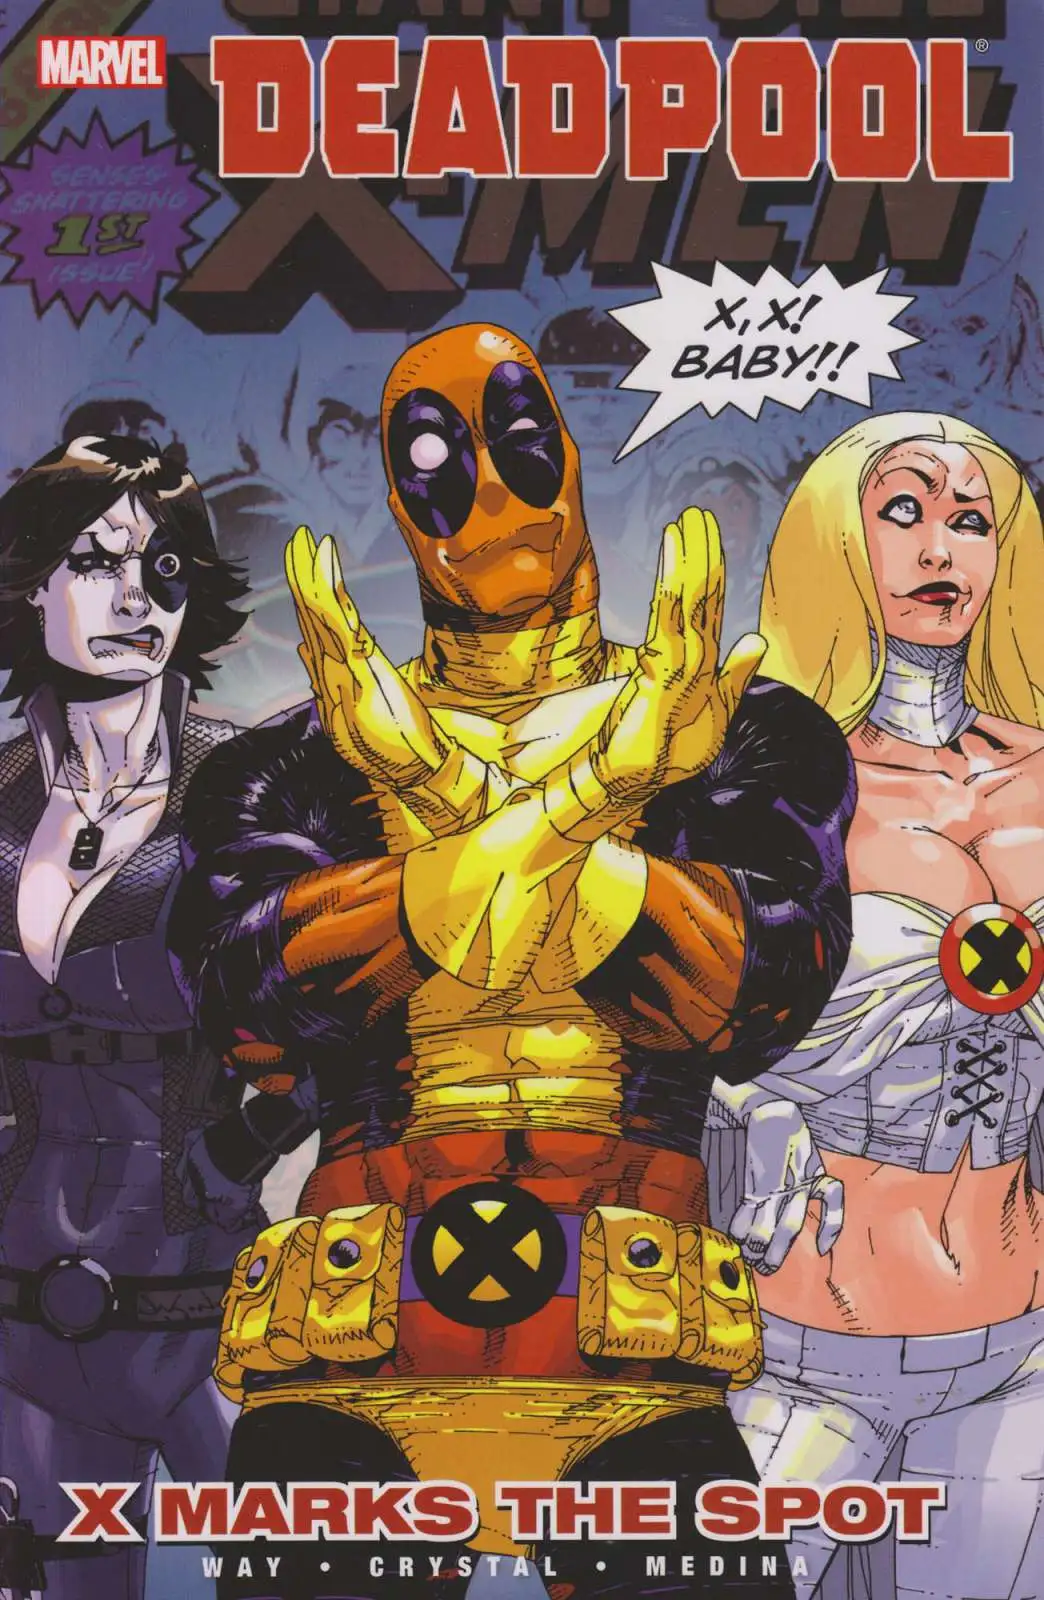 Marvel Deadpool X Marks the Spot Trade Paperback Comic Book #3 [Sun Damage on Spine]